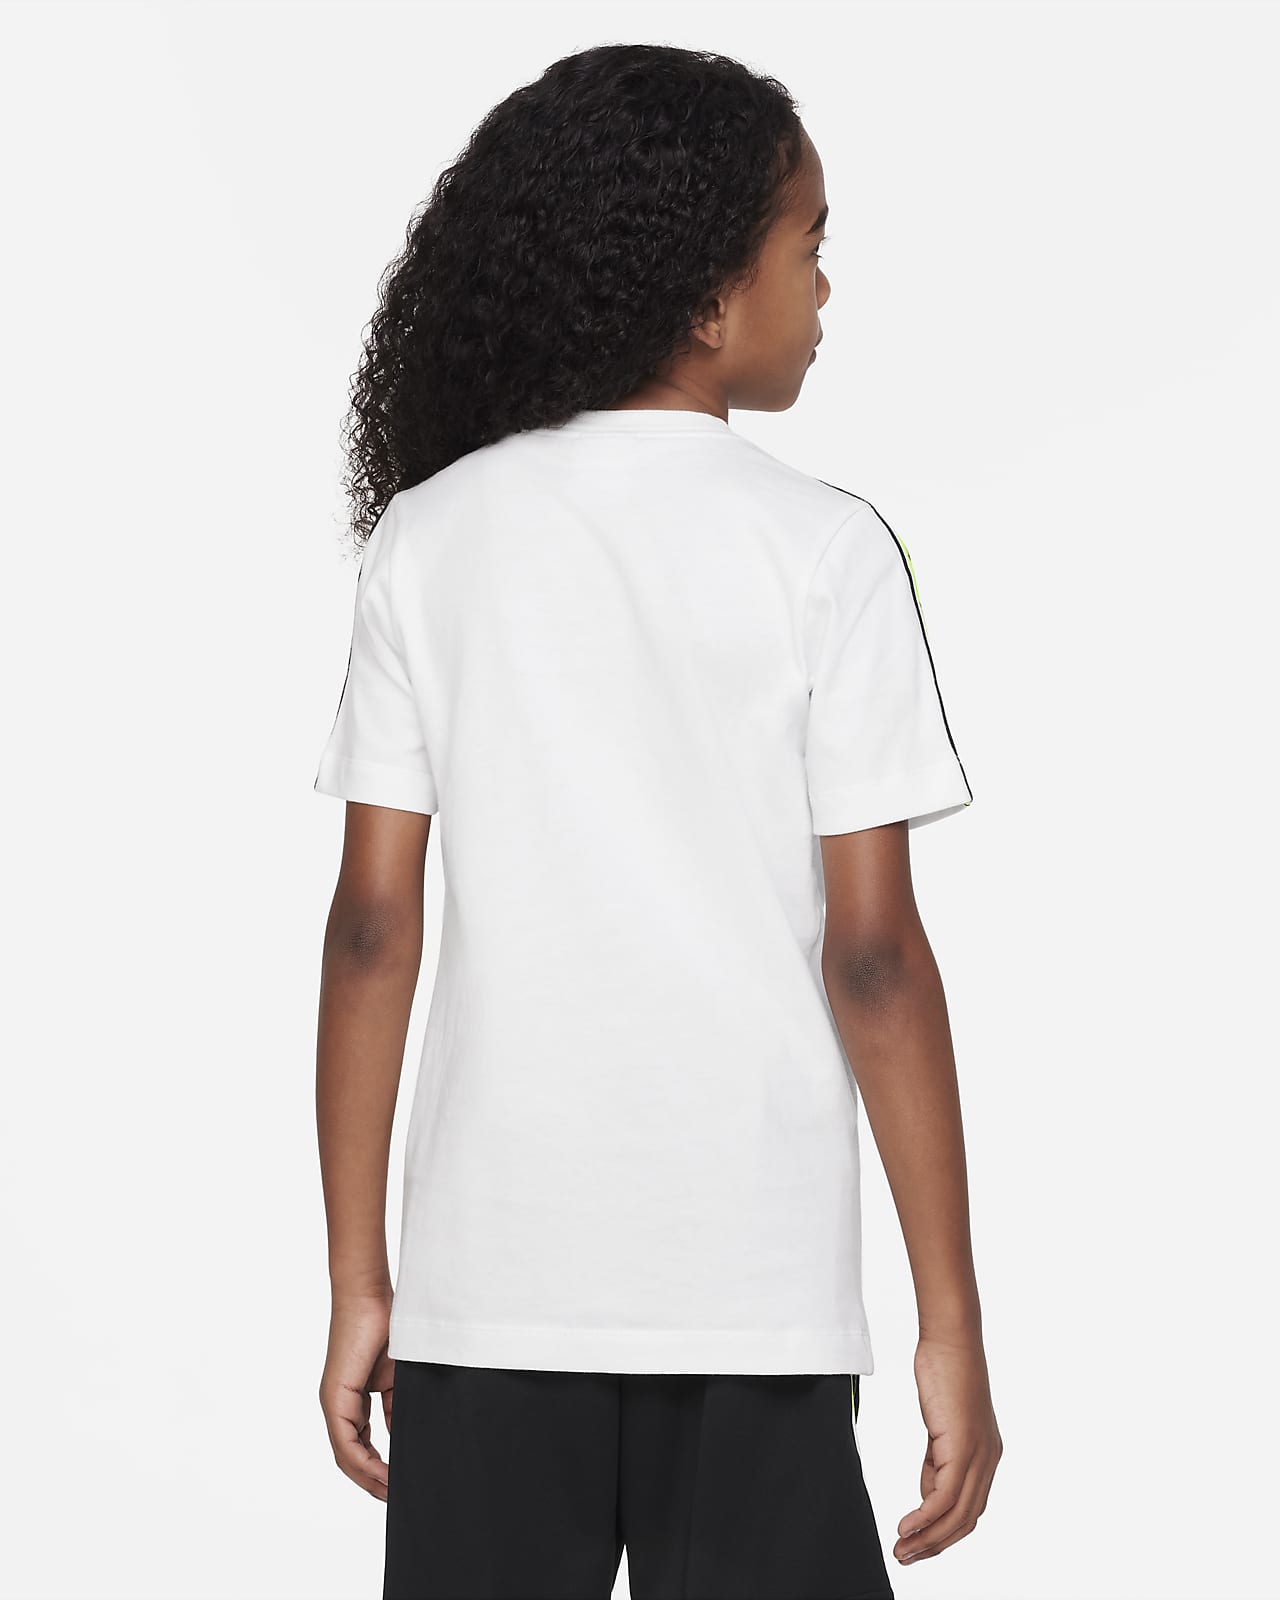 Kids\' Nike LU T-Shirt. Nike Repeat Sportswear (Boys\') Older